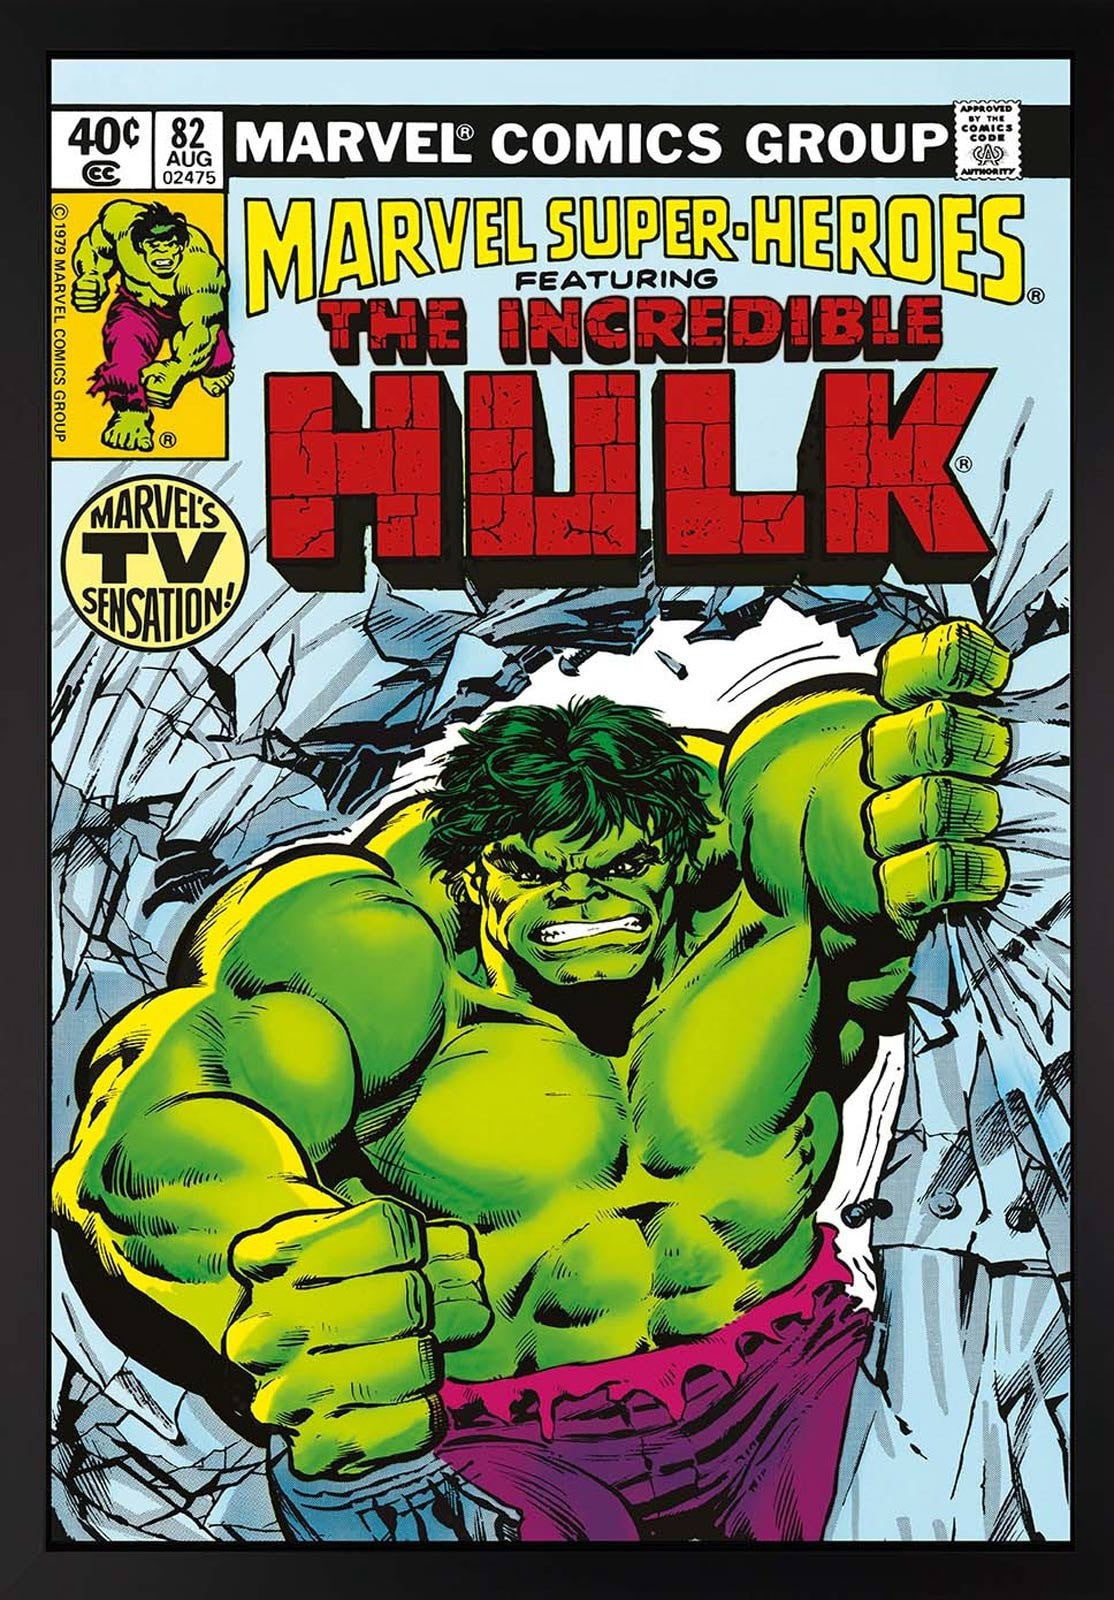 The Incredible Hulk #82 - Marvel's TV Sensation Stan Lee